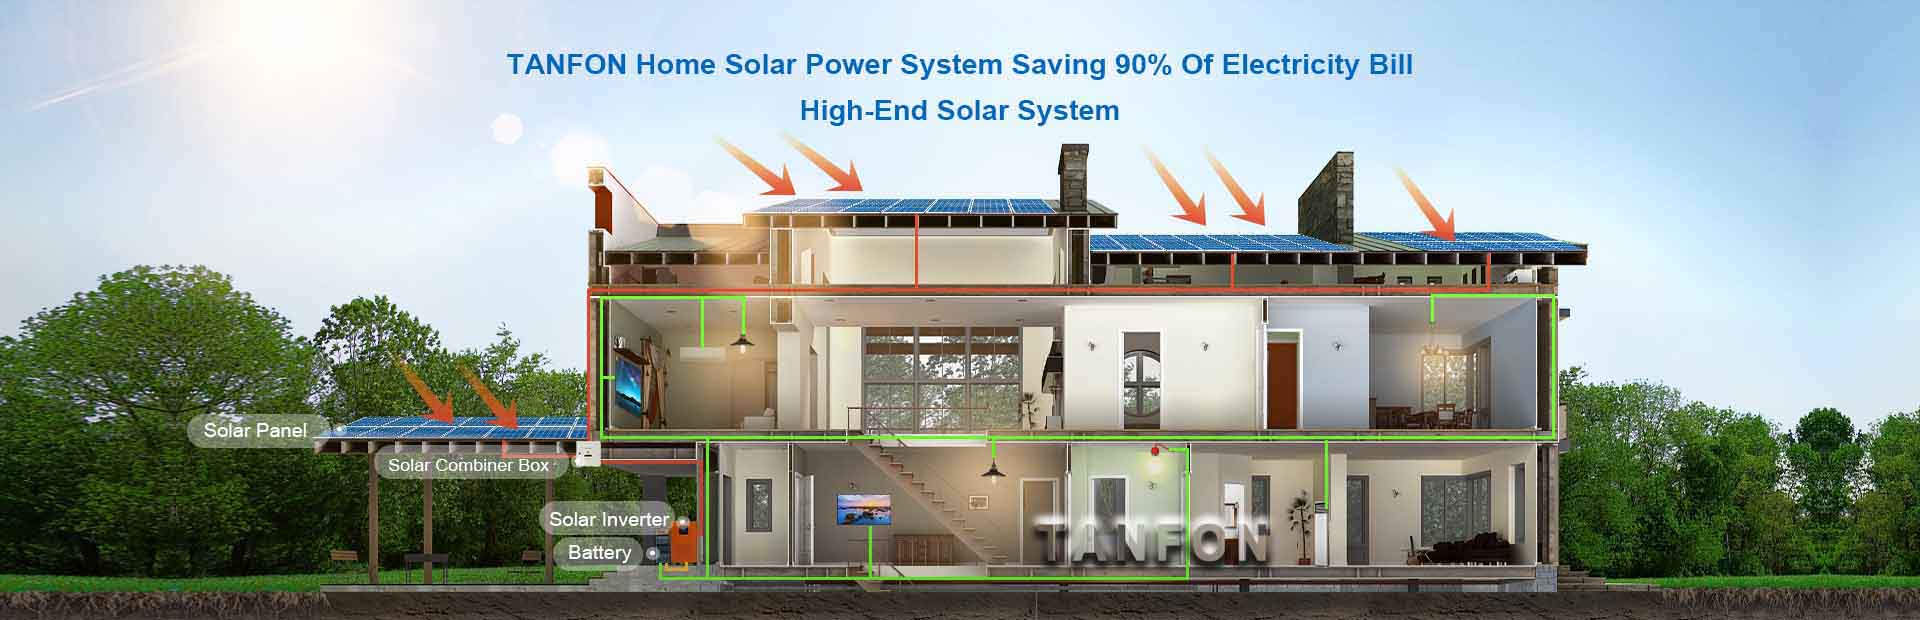 TANFON Home Solar Power System